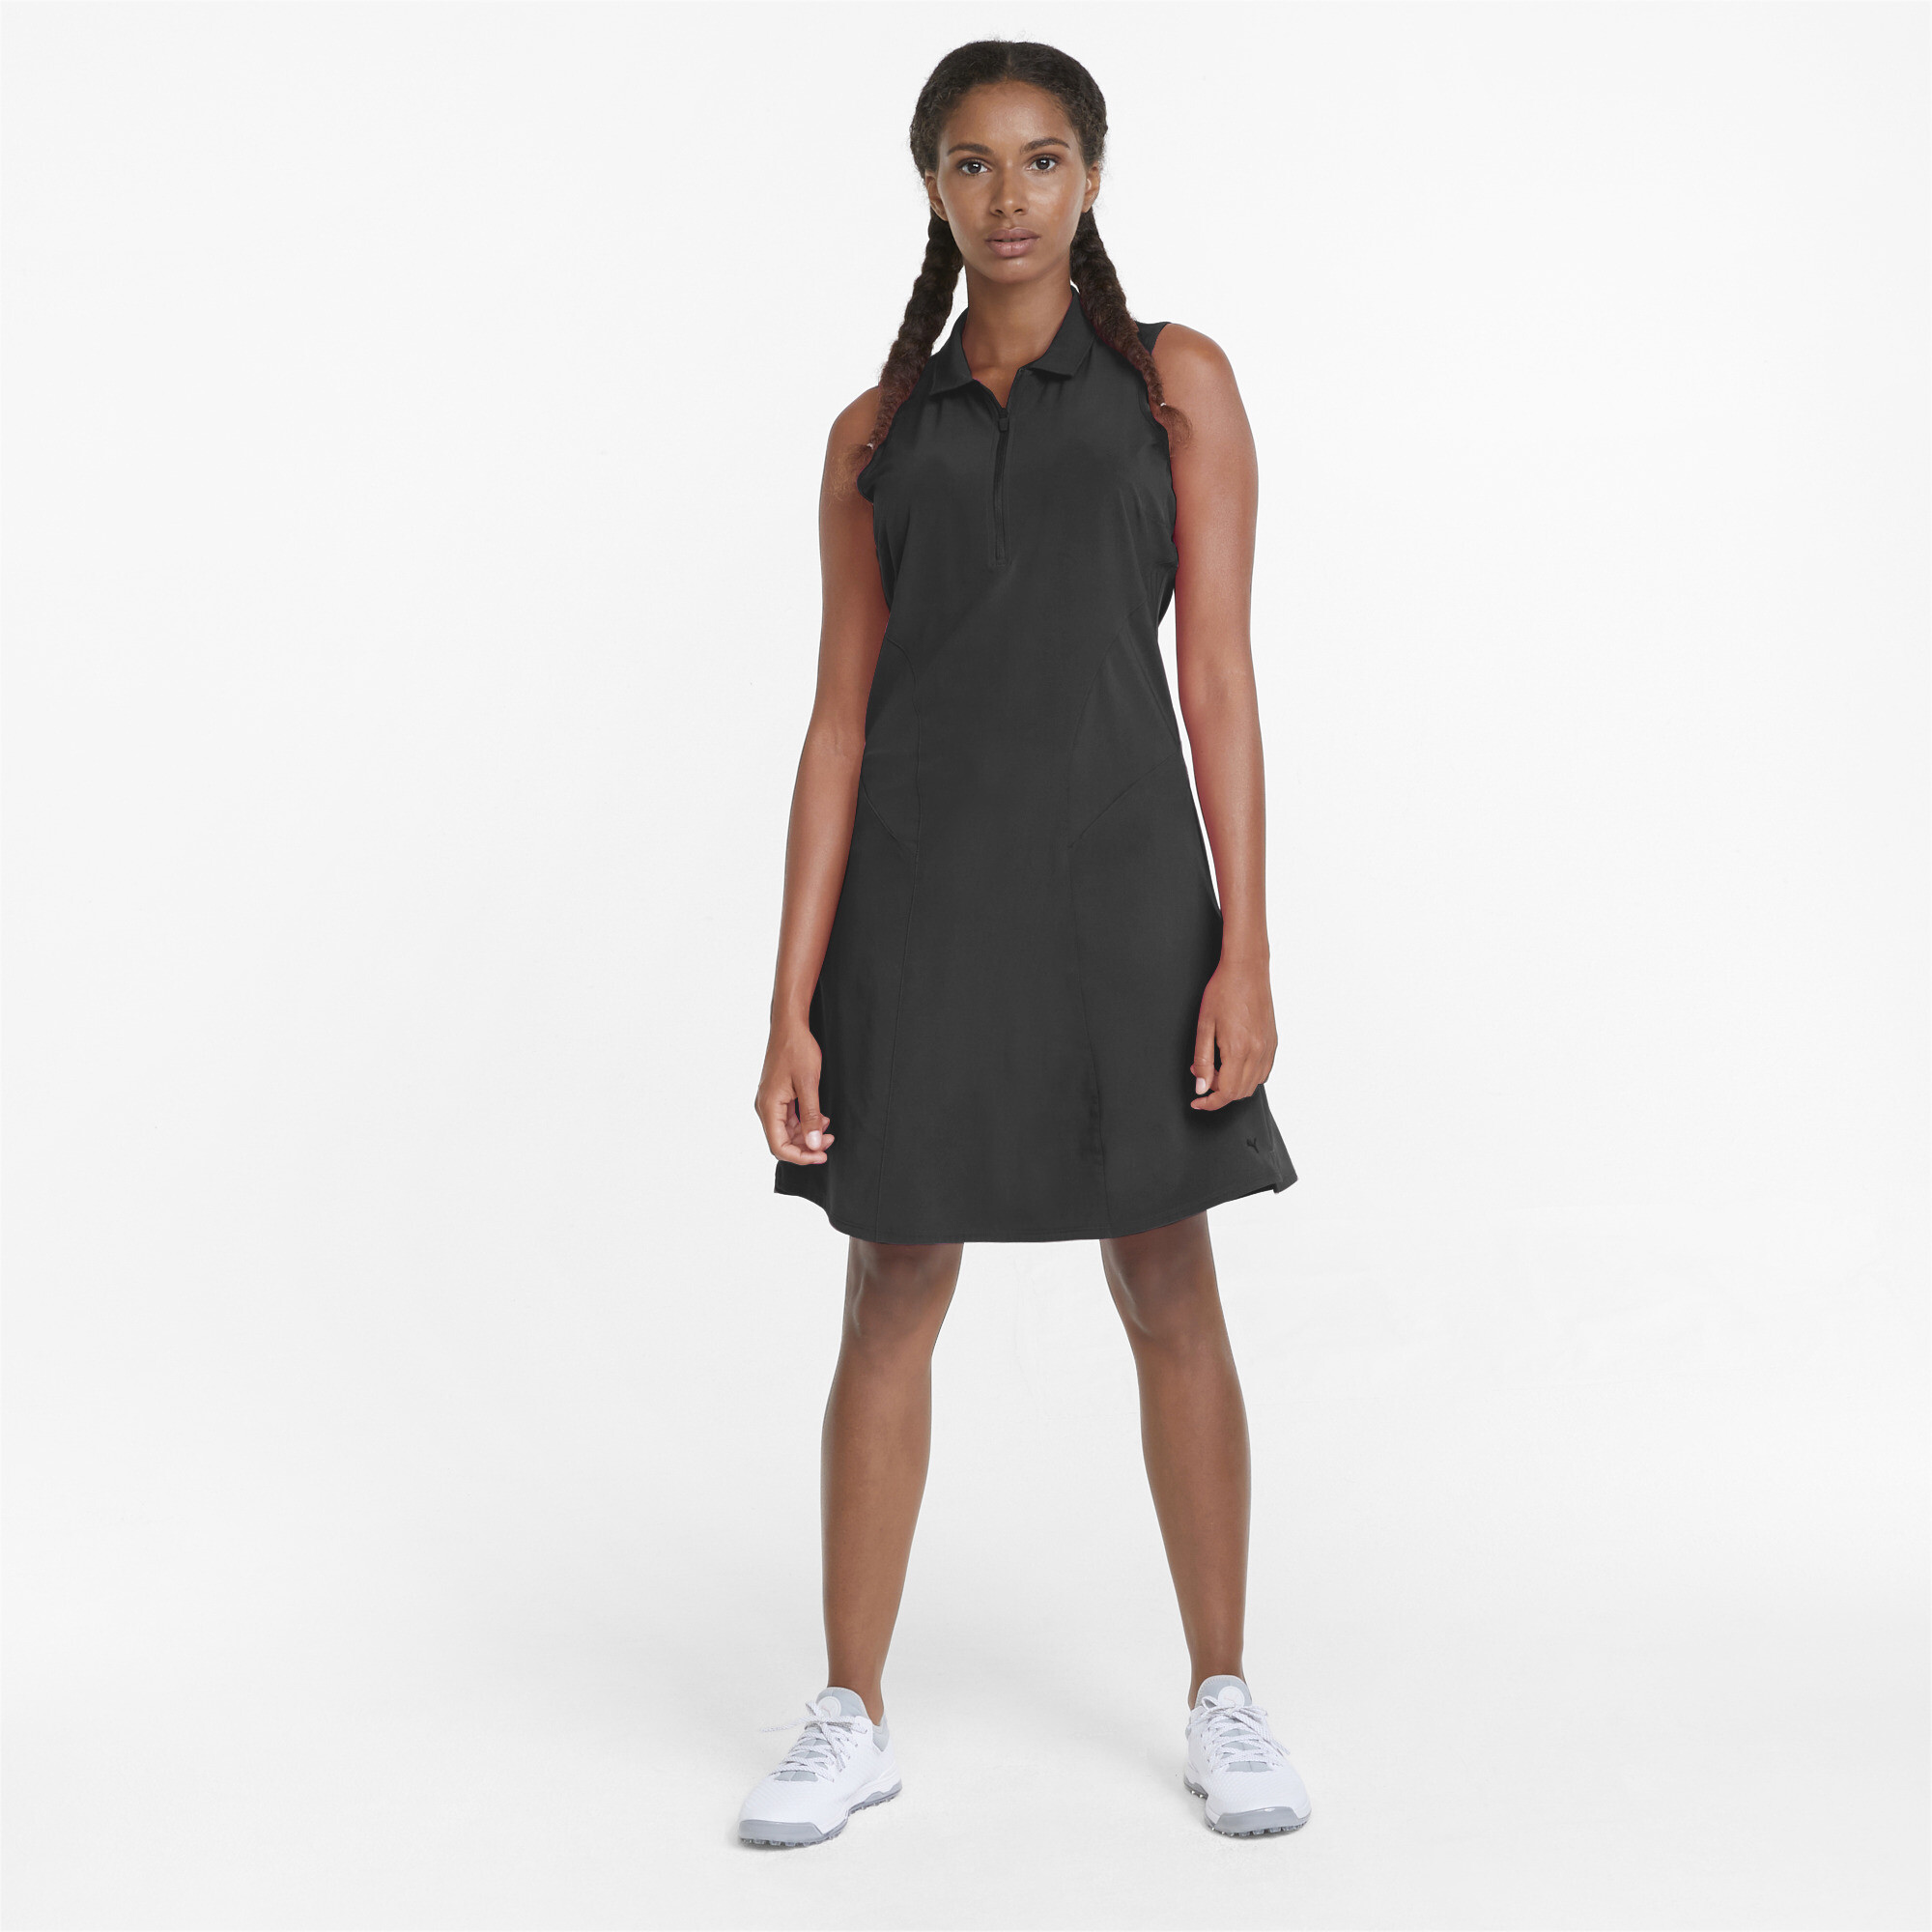 Women's Puma Cruise's Golf Dress, Black, Size L, Clothing